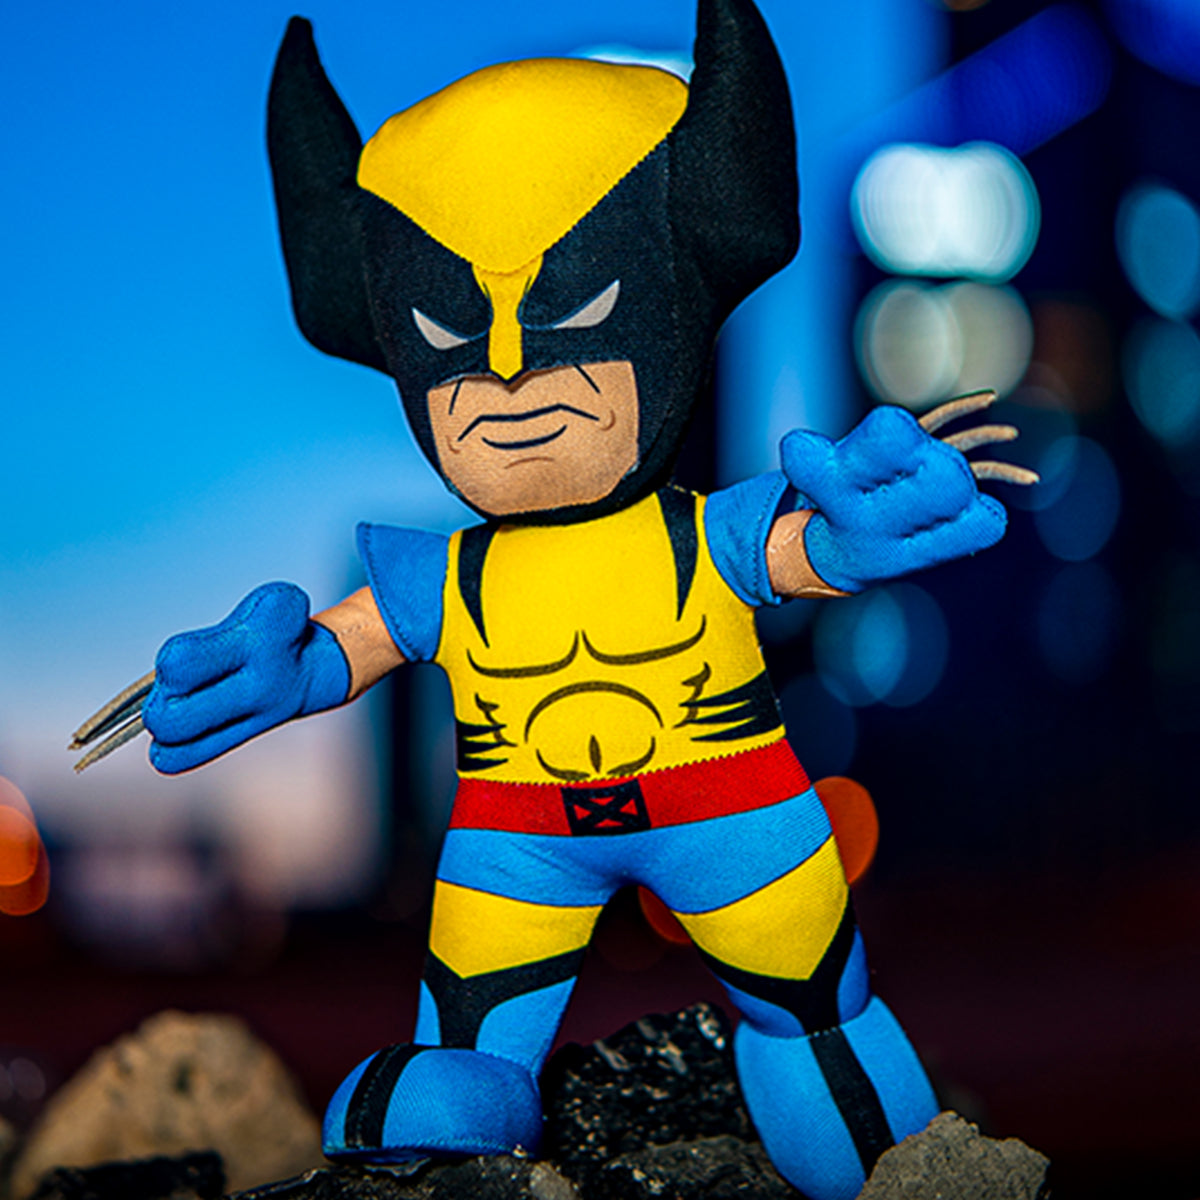 Marvel Wolverine 10&quot; Plush Figure